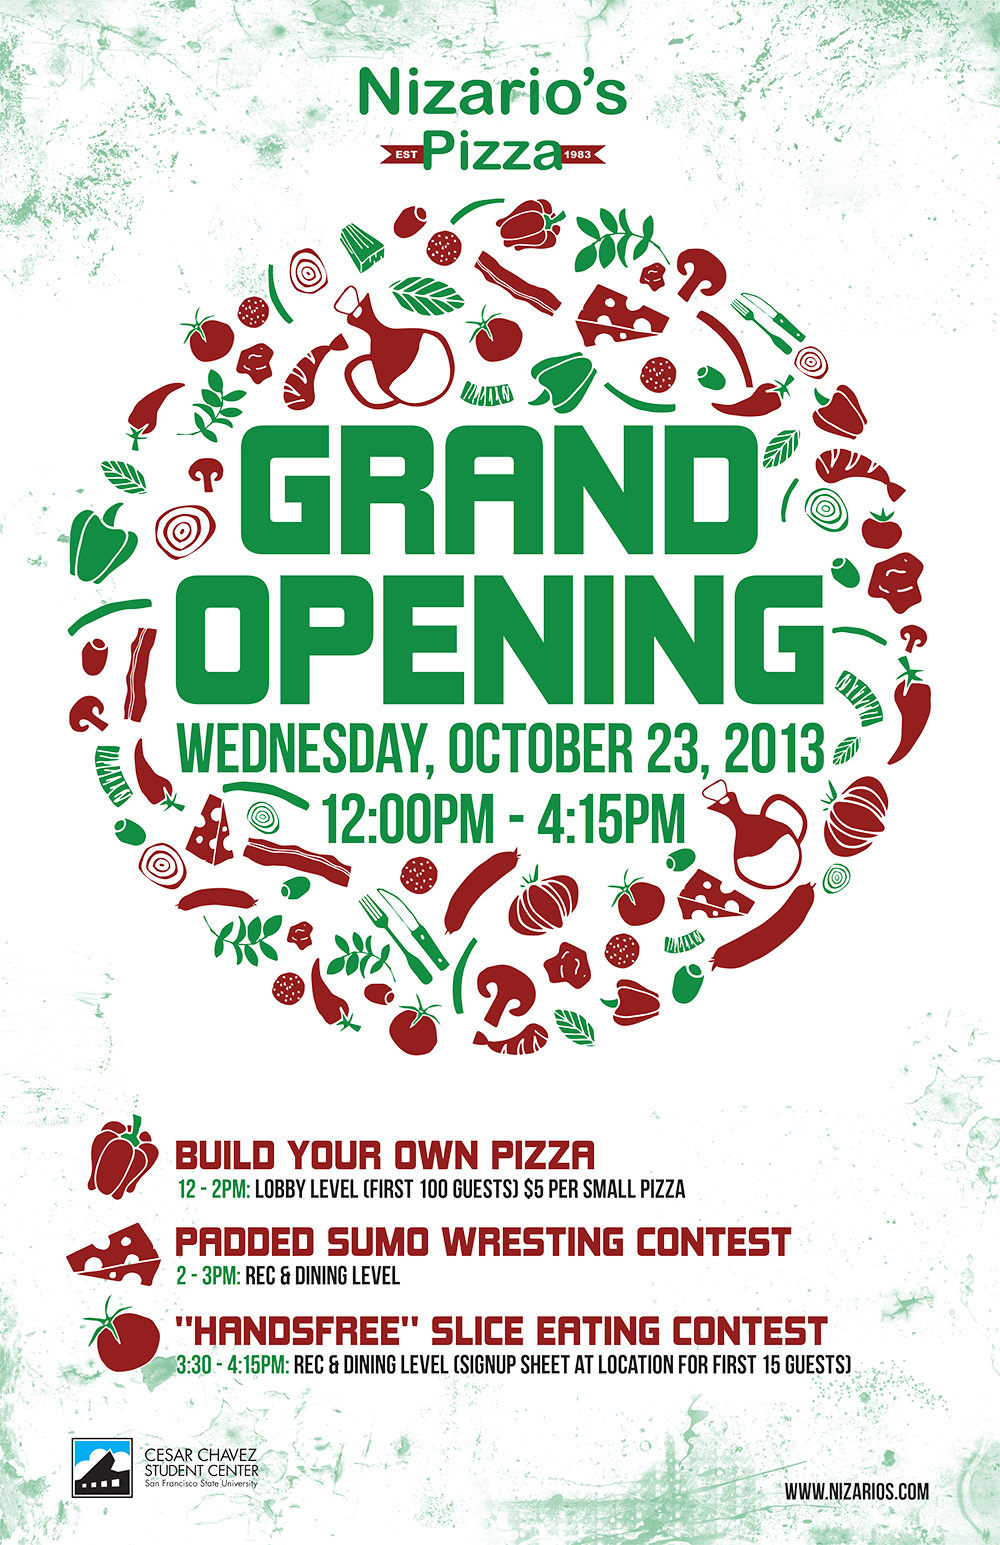 Pizza Grand OPening sfsu CCSC San Francisco State